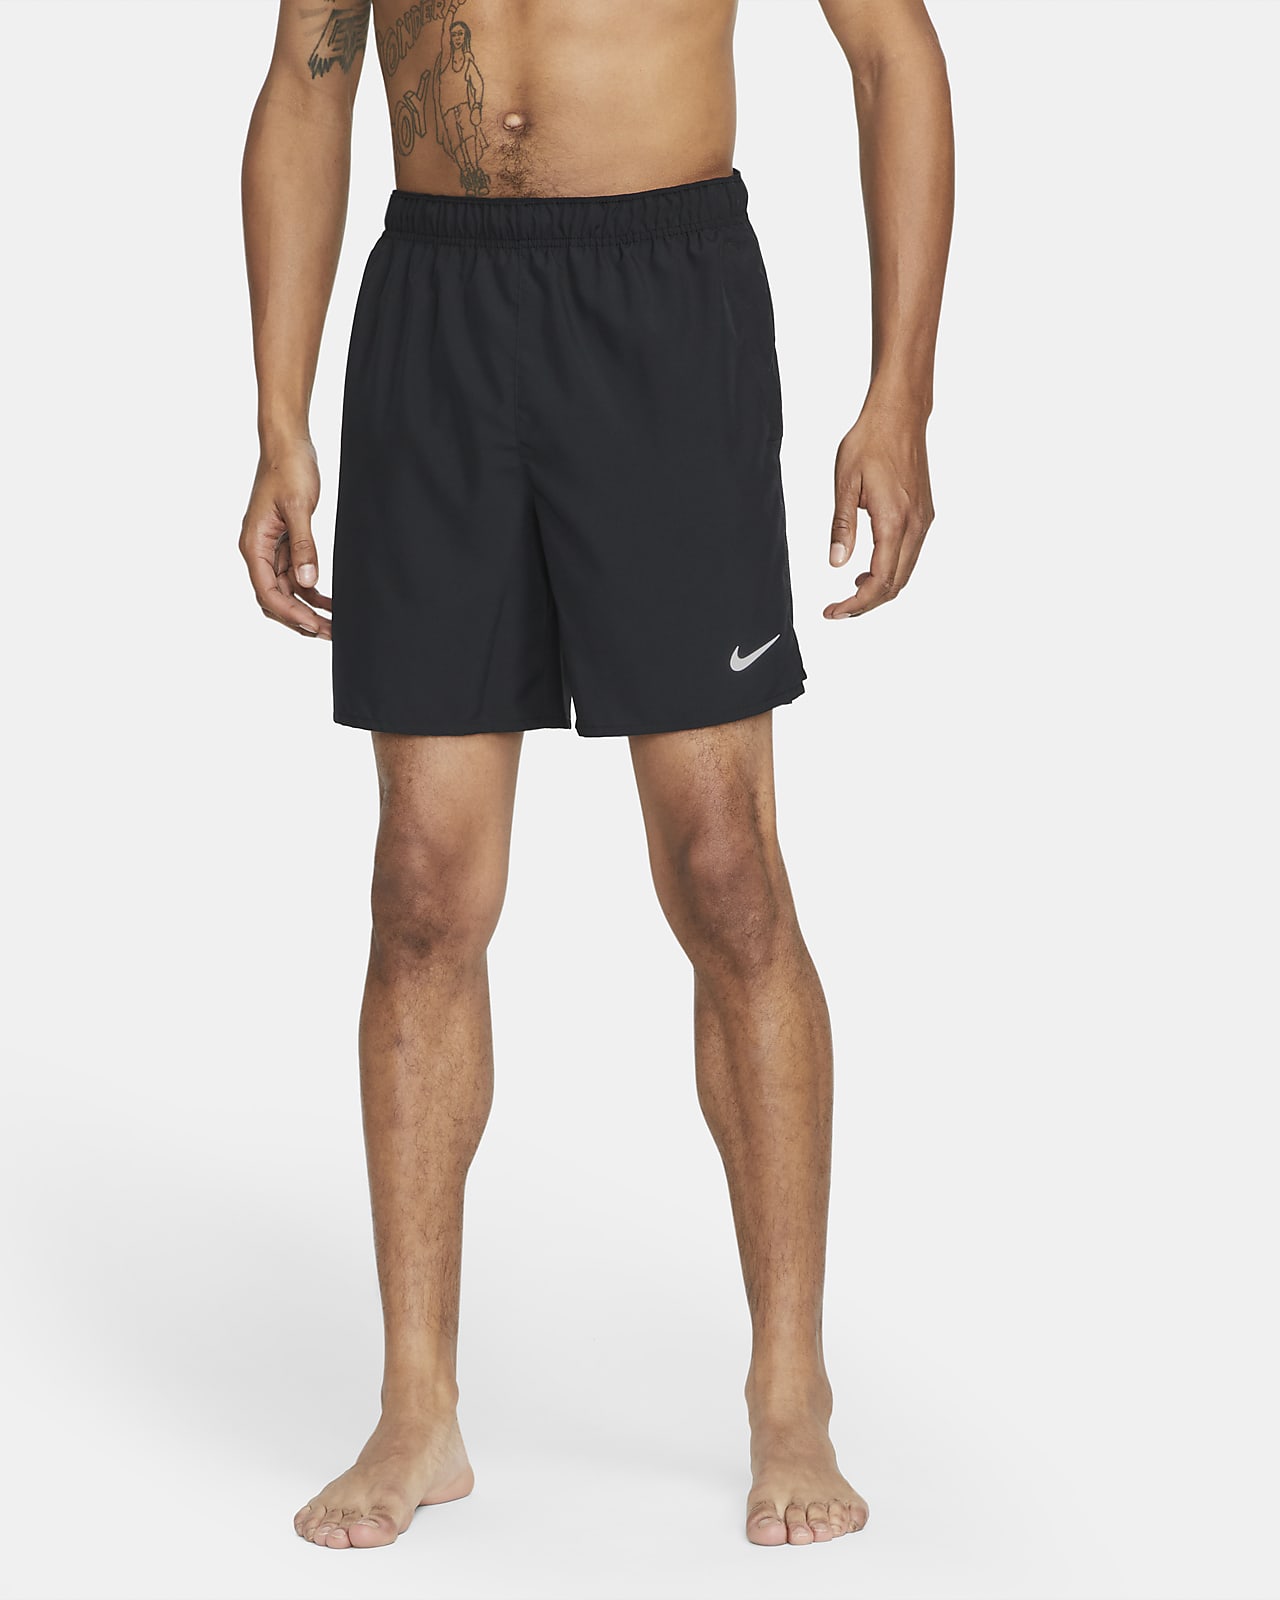 Nike Challenger Pantalons curts Dri-FIT sense folre de 18 cm de running - Home